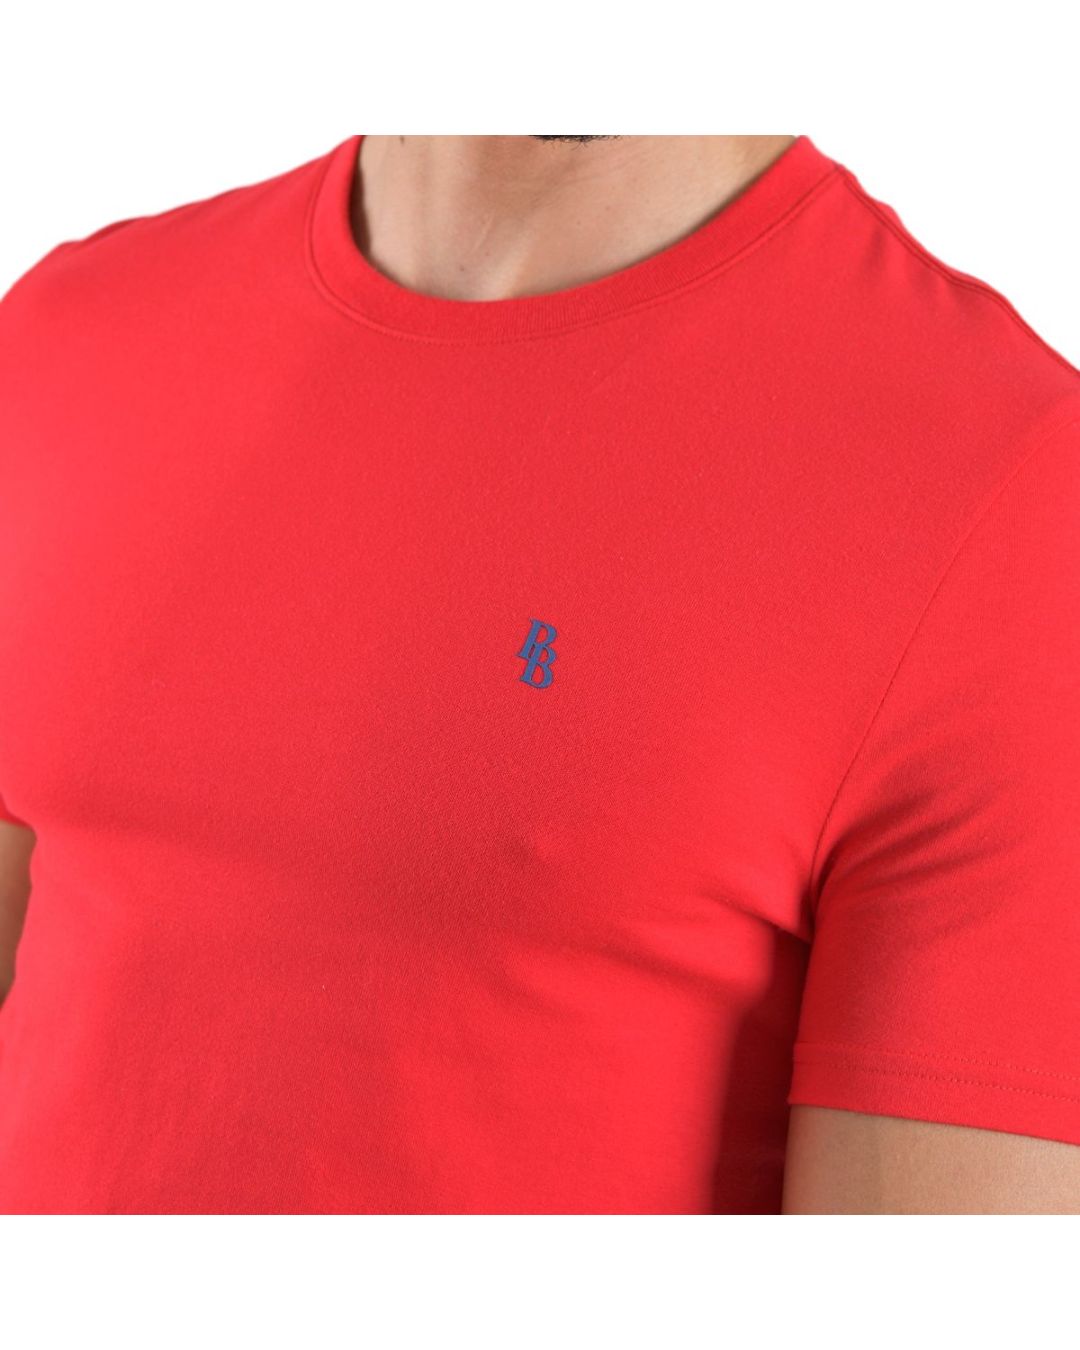 Men's Solid Short Sleeve Crew Neck T-Shirt Red